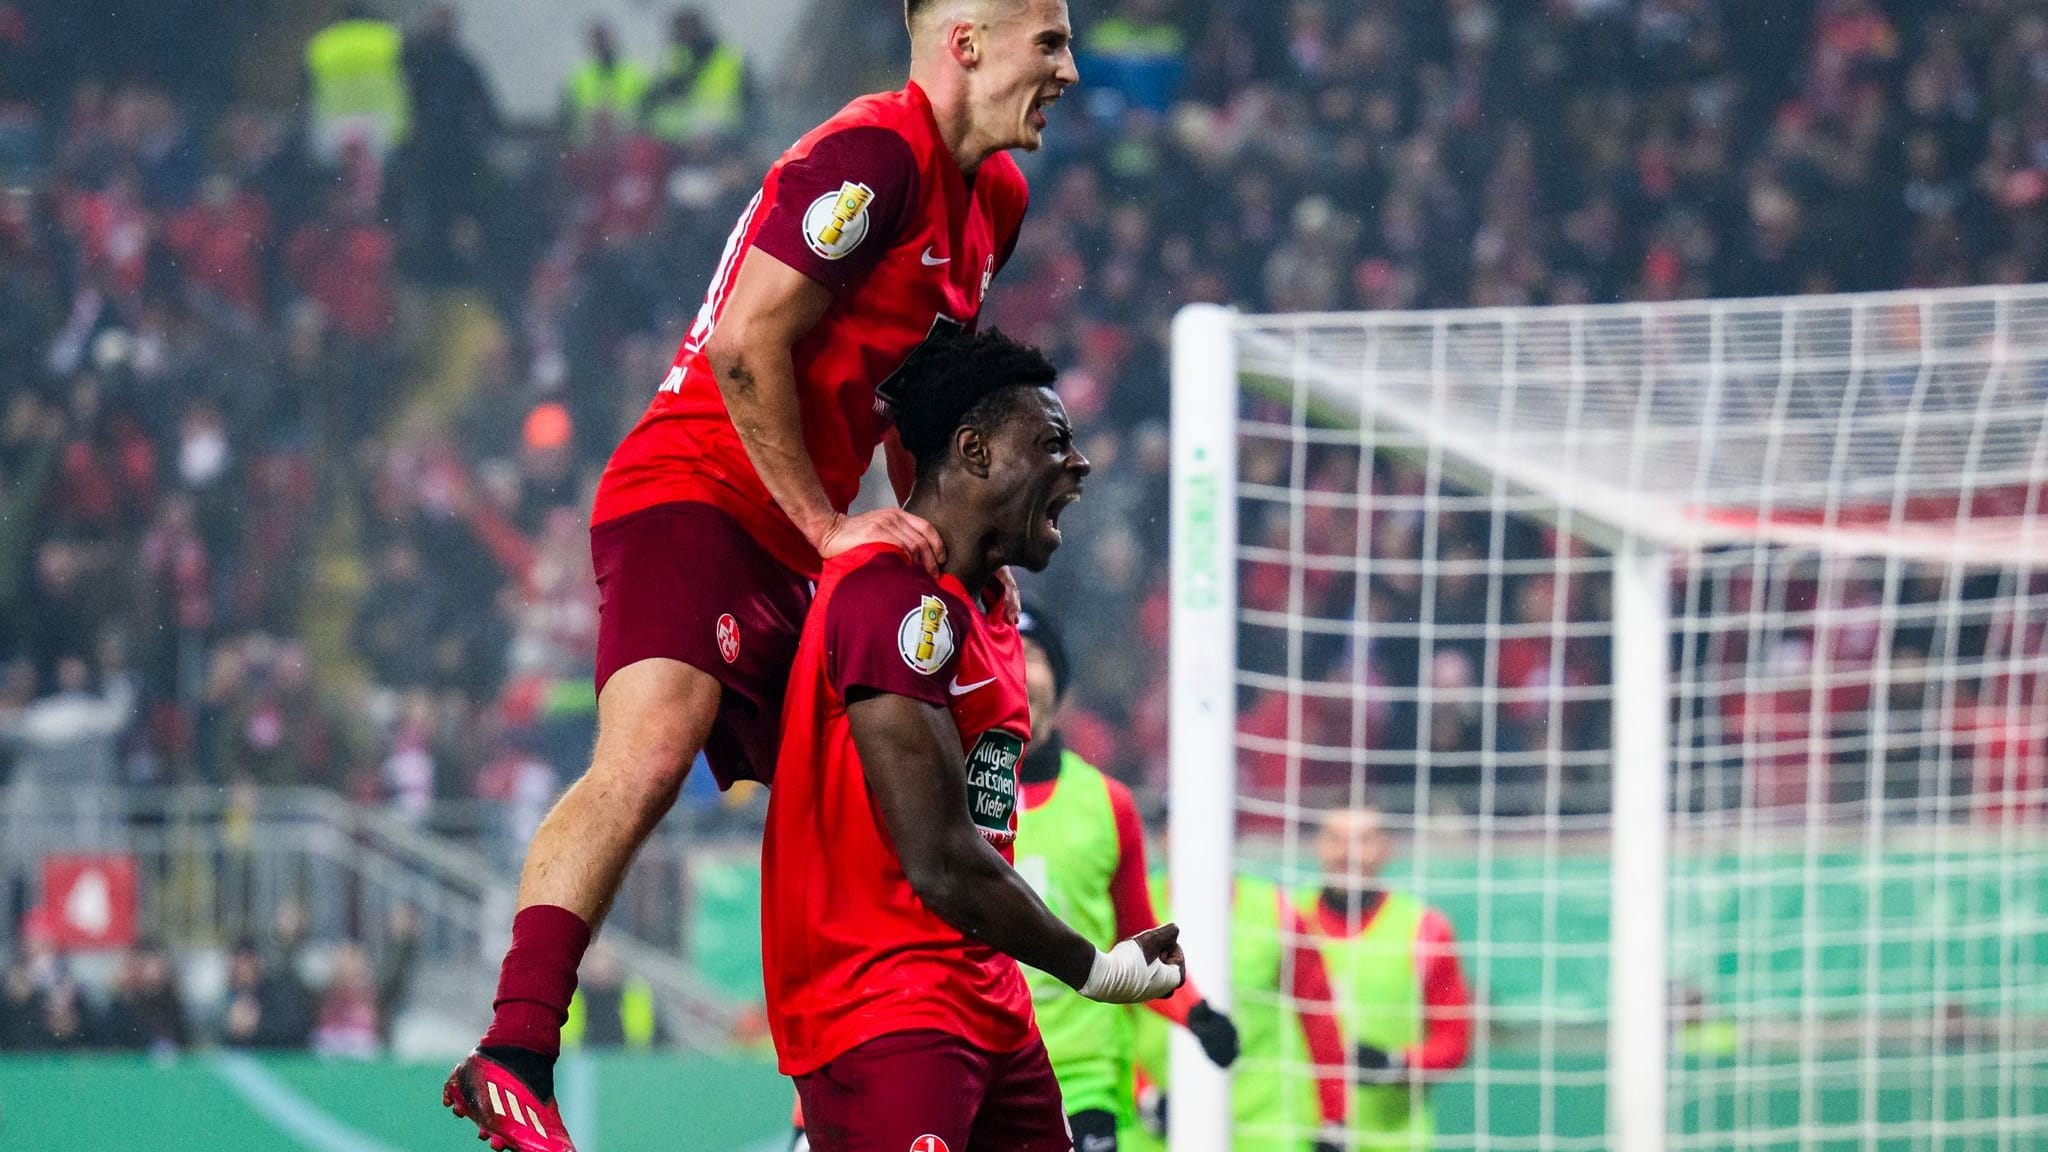 DFB-Pokal | Traumstart für Grammozis: Lautern besiegt Nürnberg im Pokal